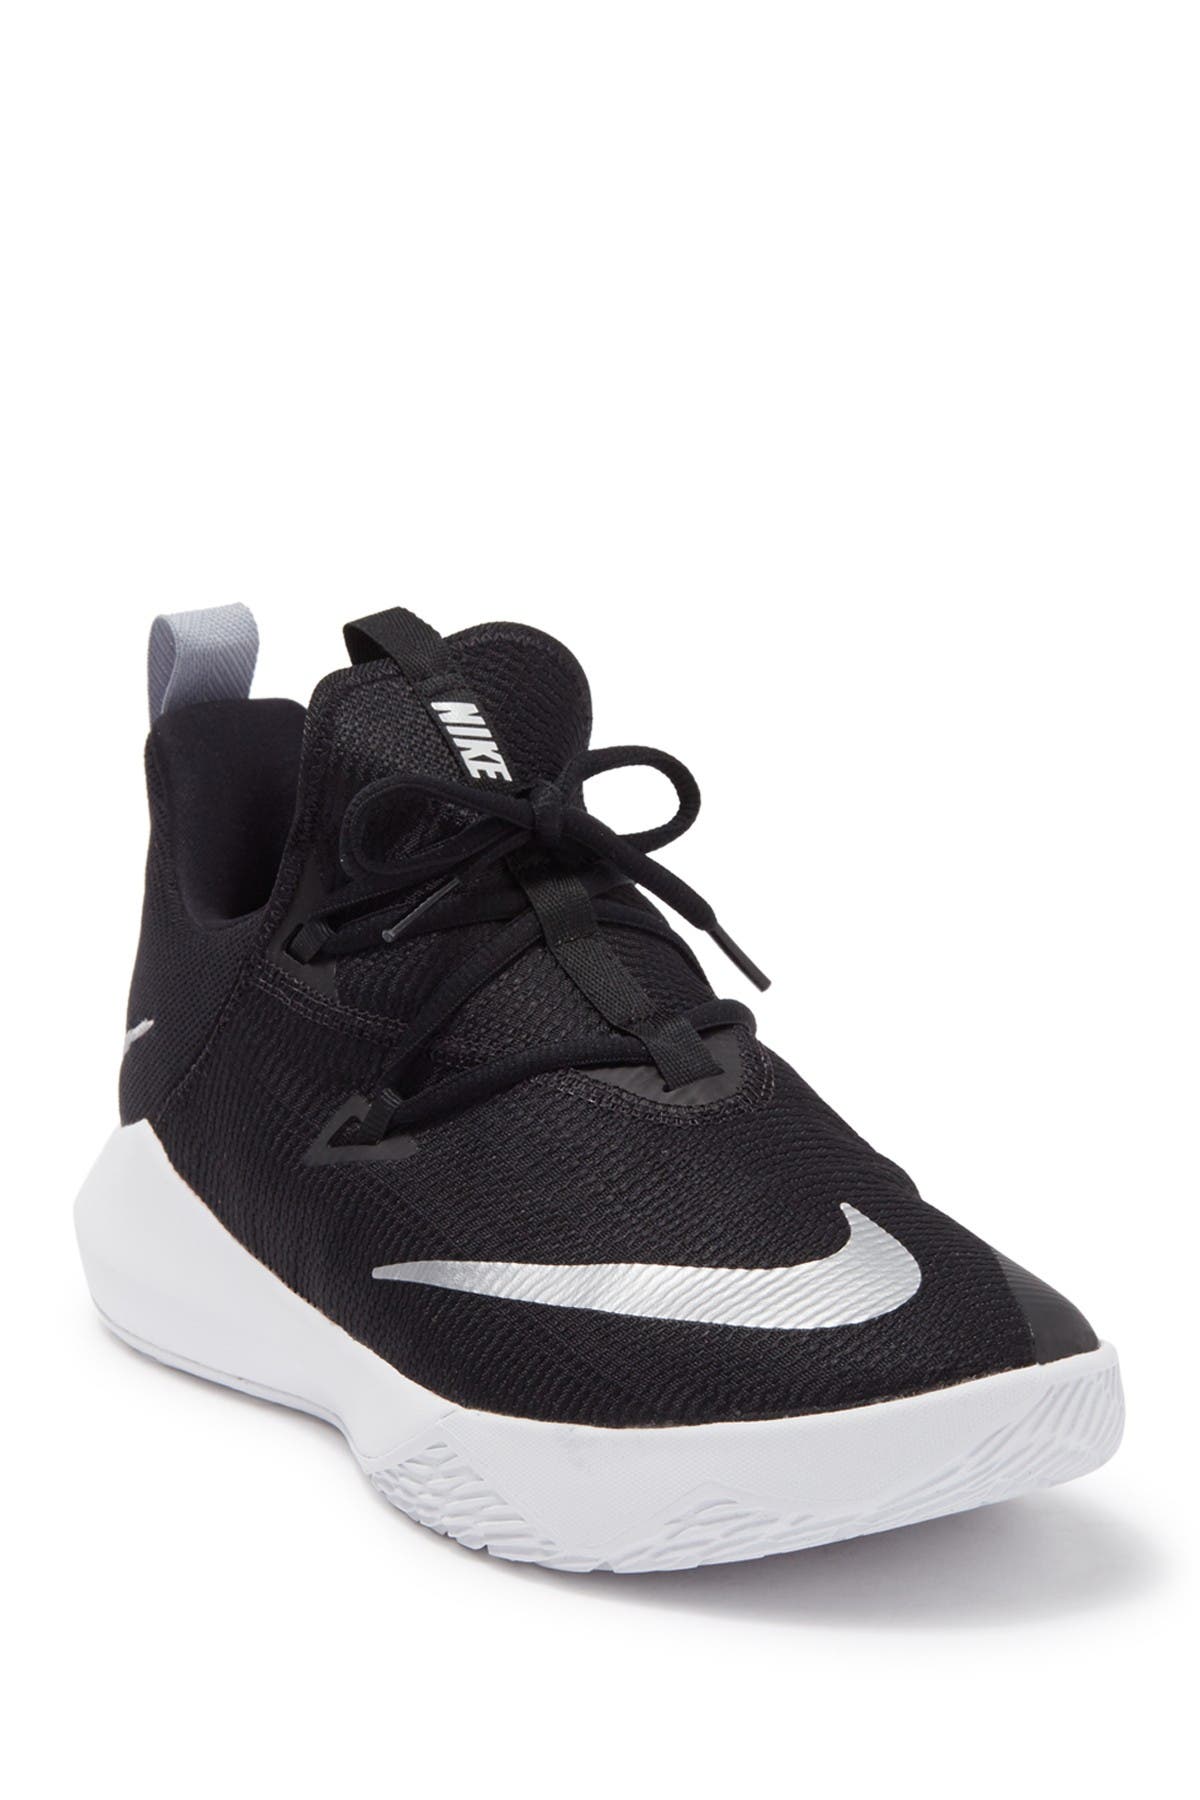 Nike | Zoom Shift 2 TB Basketball Shoe 